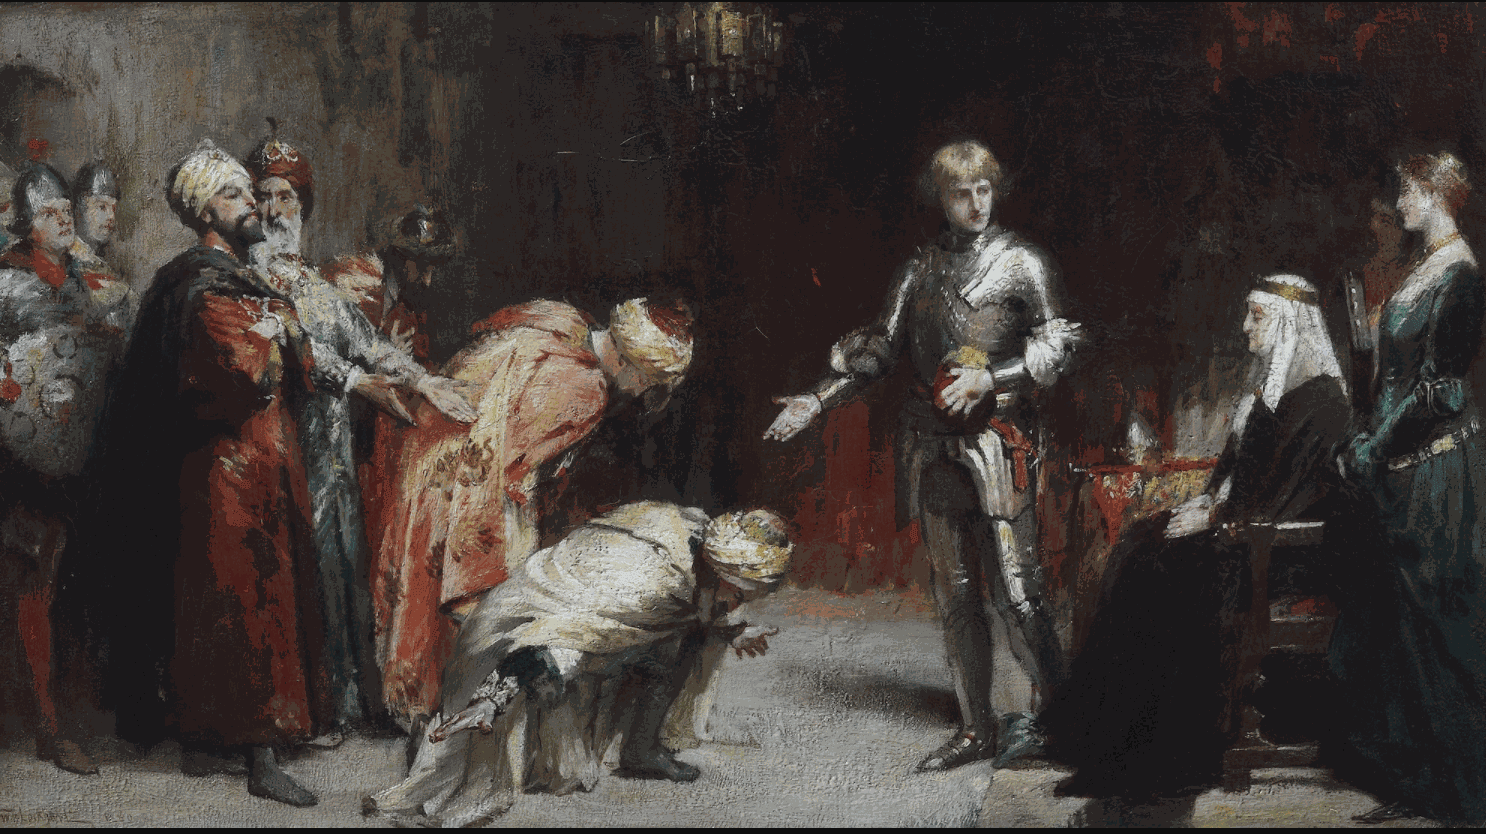 William Ewart Lockhart RSA ARWS RSW RE (1846-1900) The Cid and the Five Moorish Kings  Oil on Canvas, 1880, 25.2 x45.7cm,  RSA Diploma Collection (Deposited, 1883) 1999.002